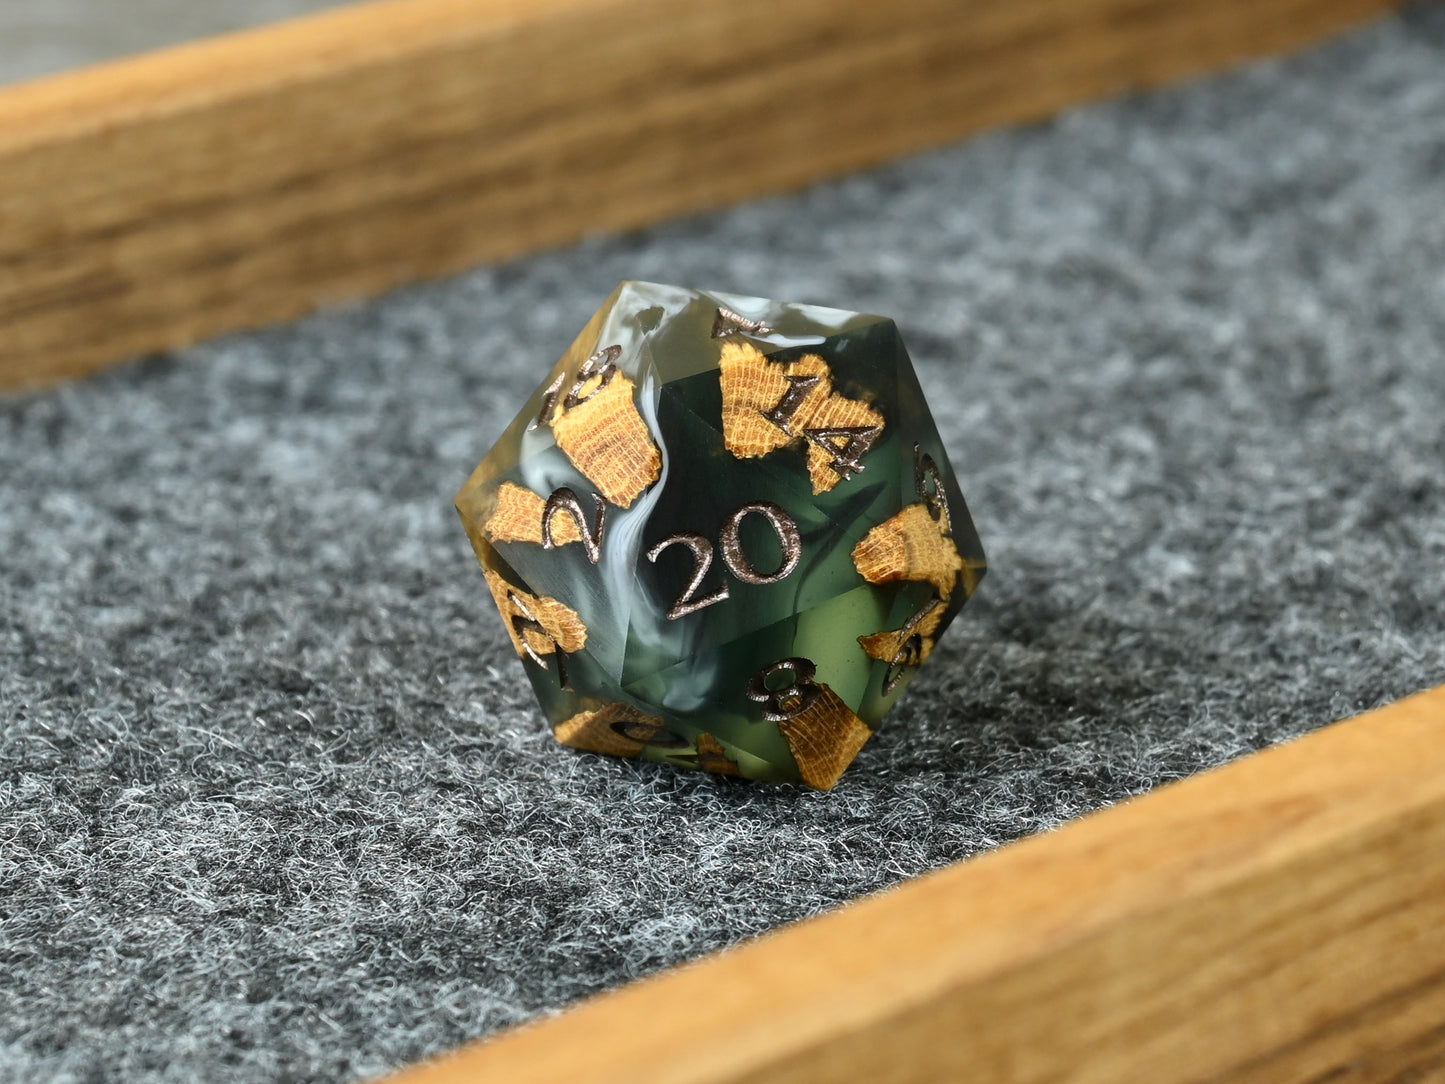 Creeping rot cholla wood d20 dice for D&D ttrpg